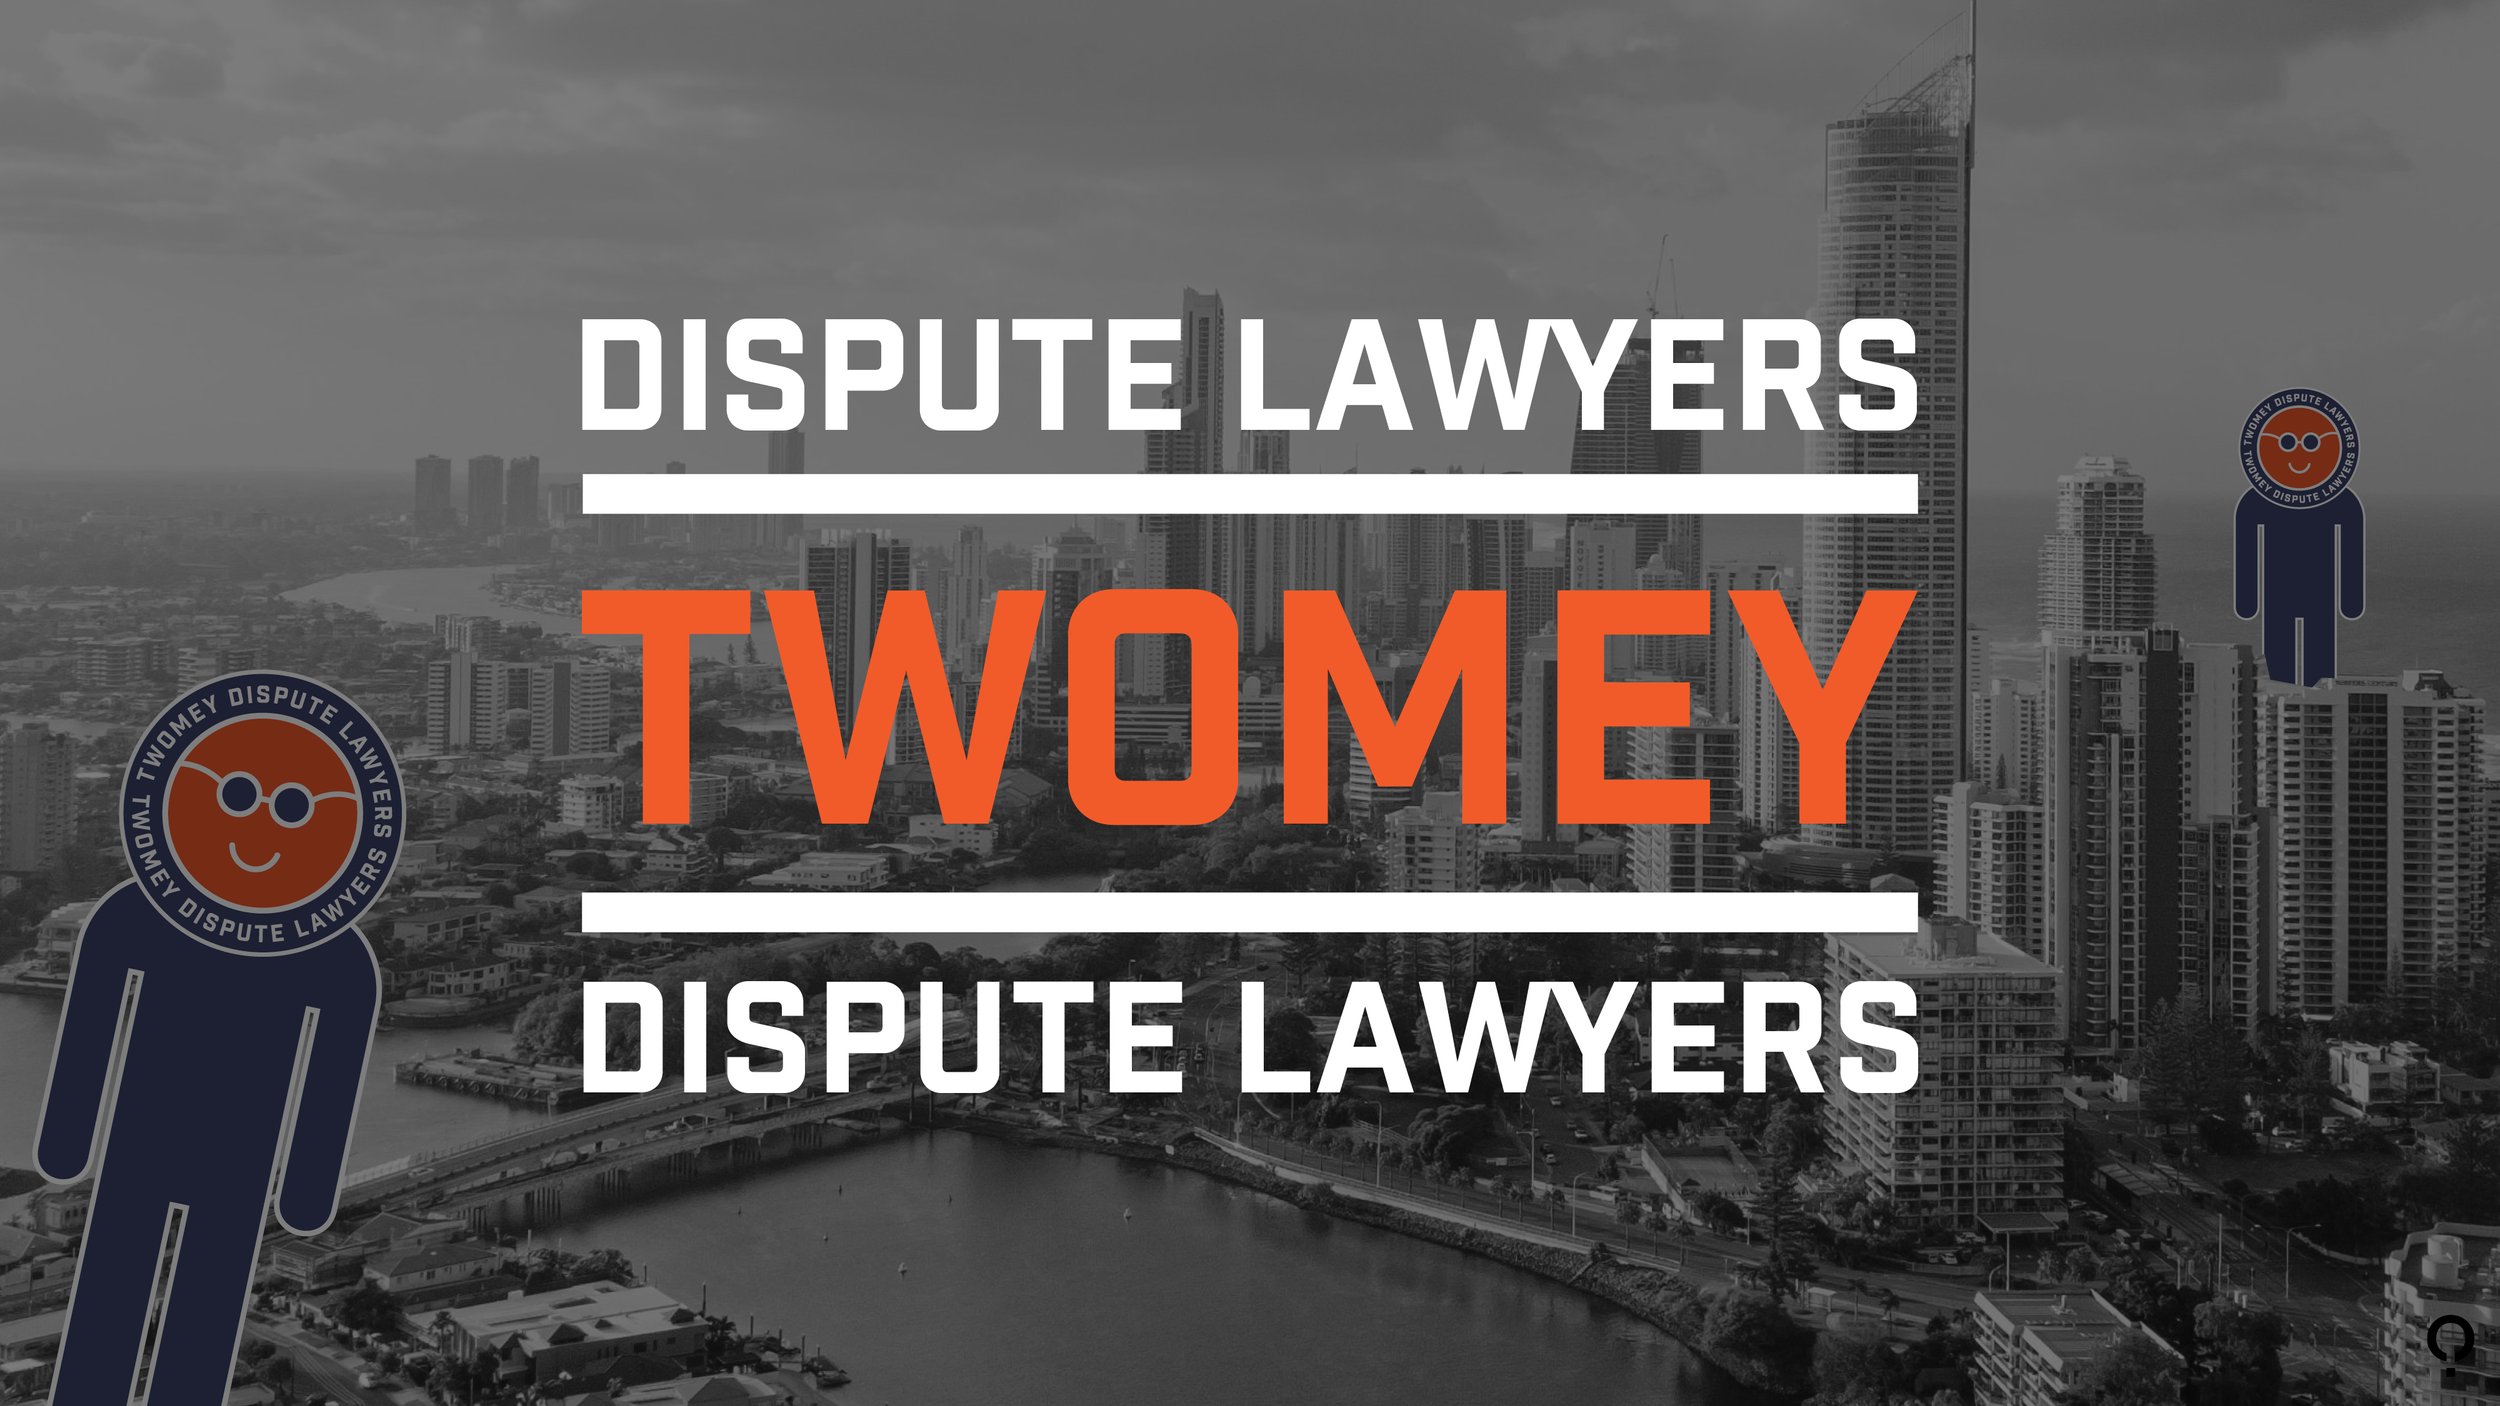 KK&O_Twomey Dispute Lawyers_Merch_Overview_v2.jpg